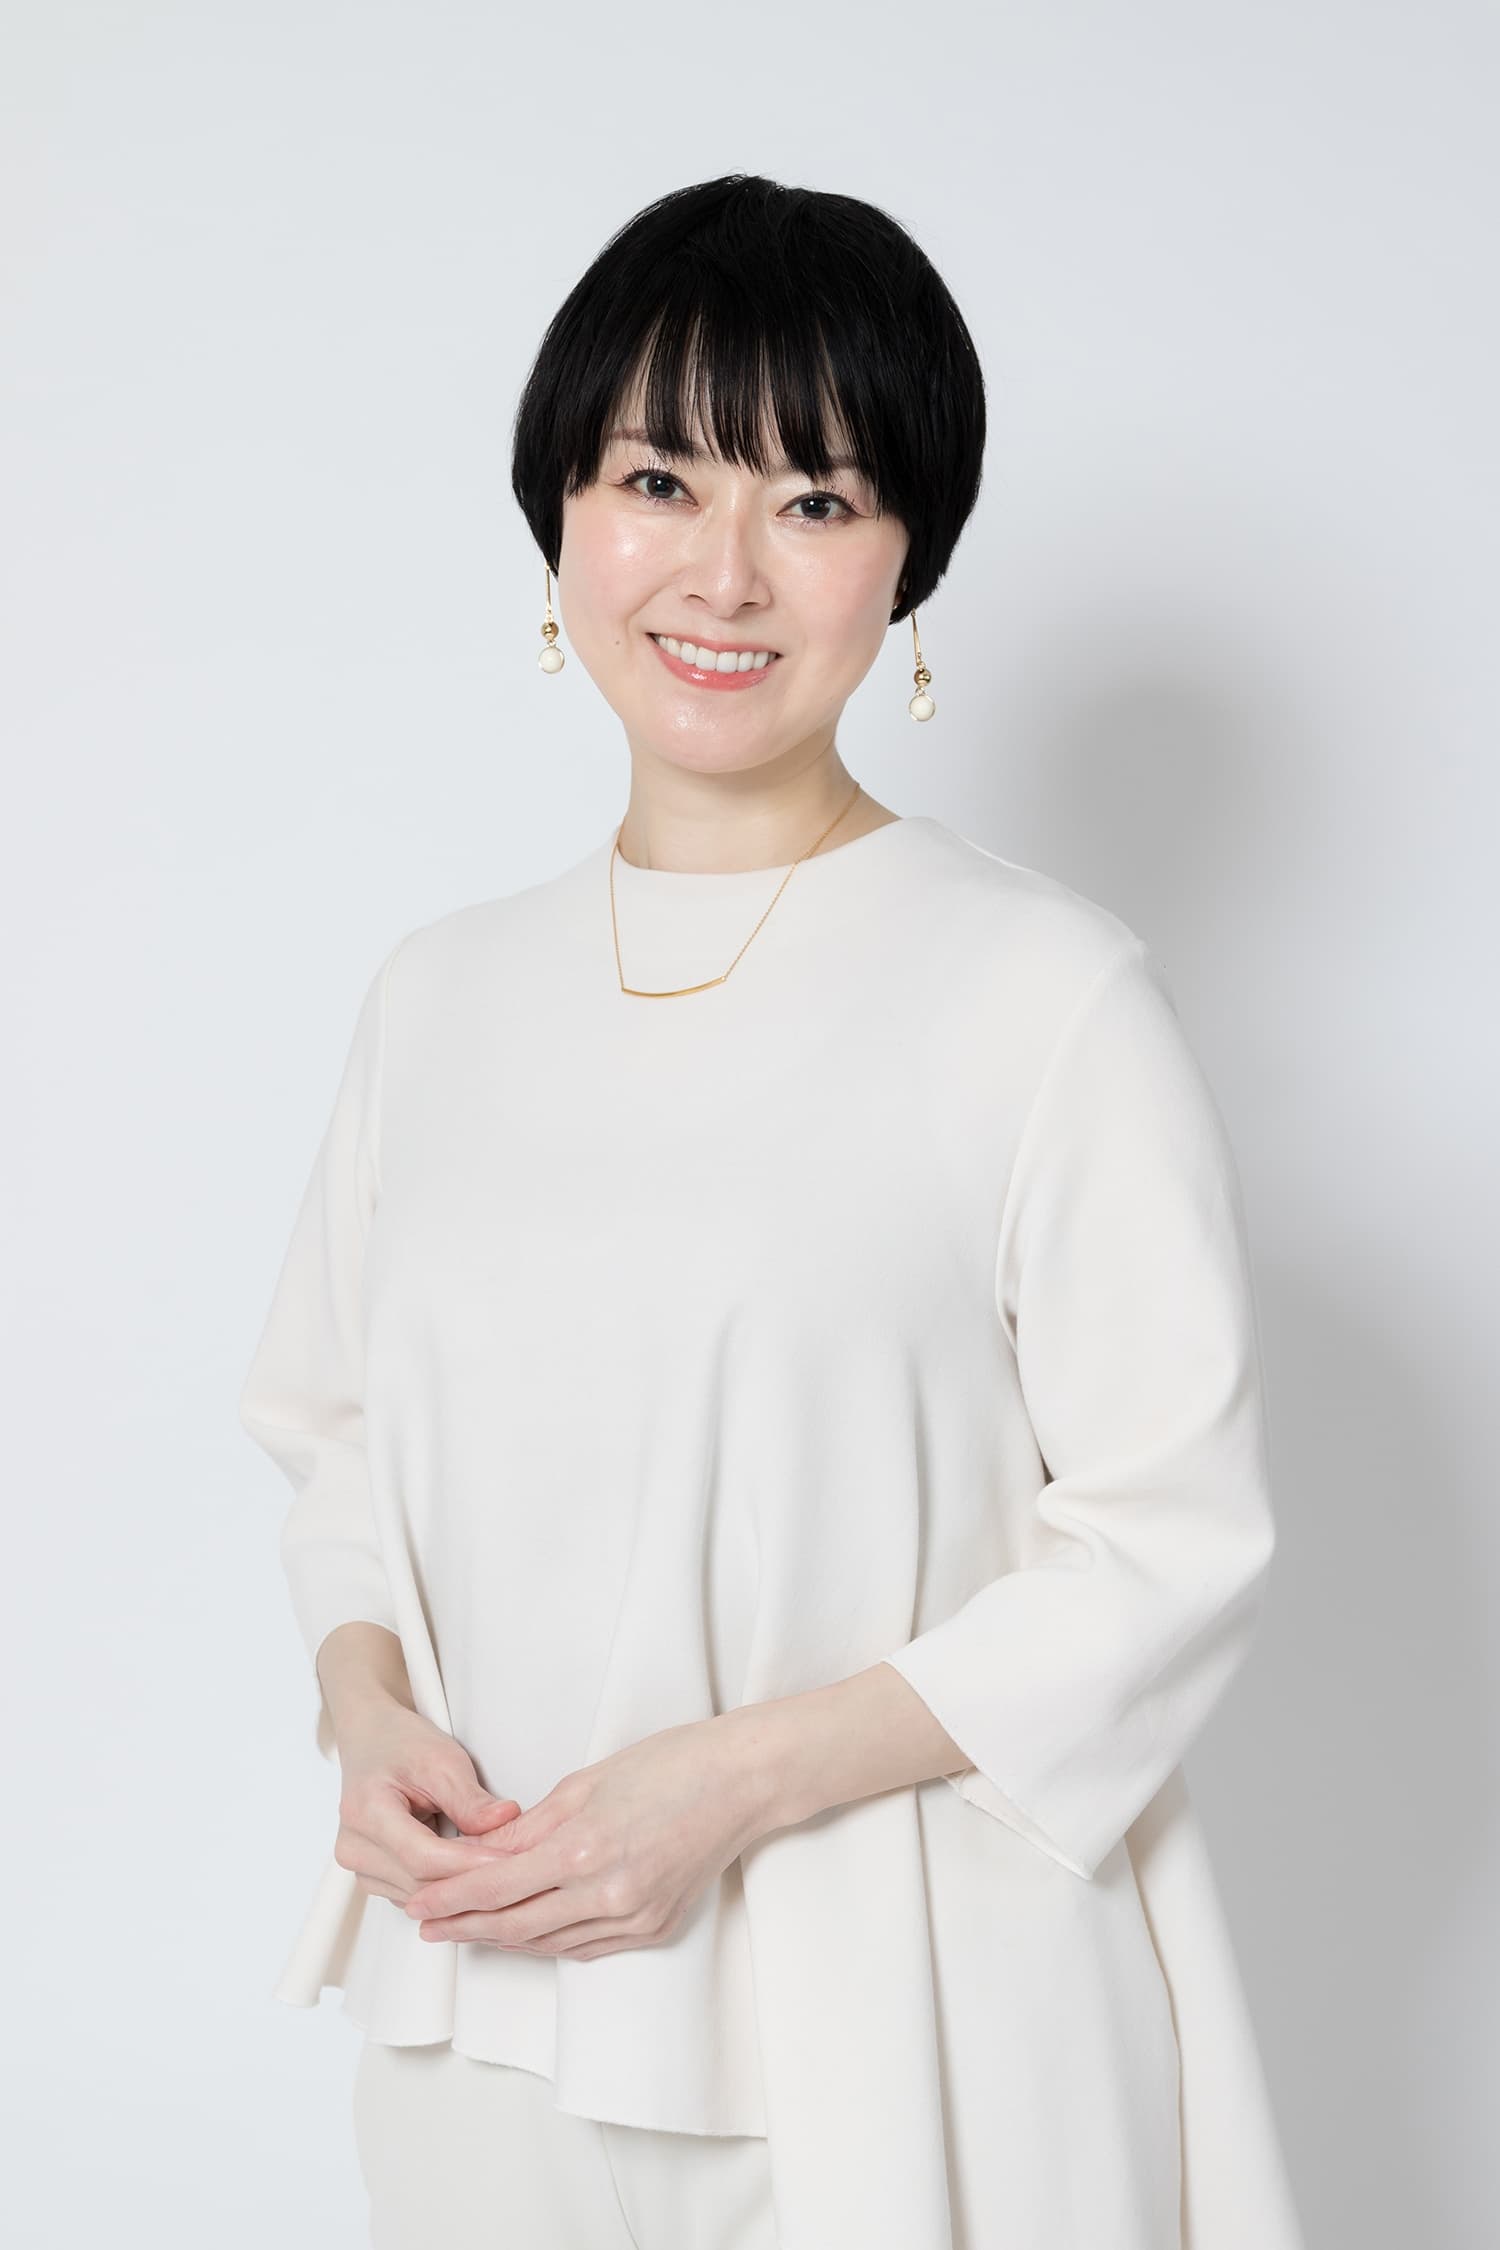 Nagiko Tōno